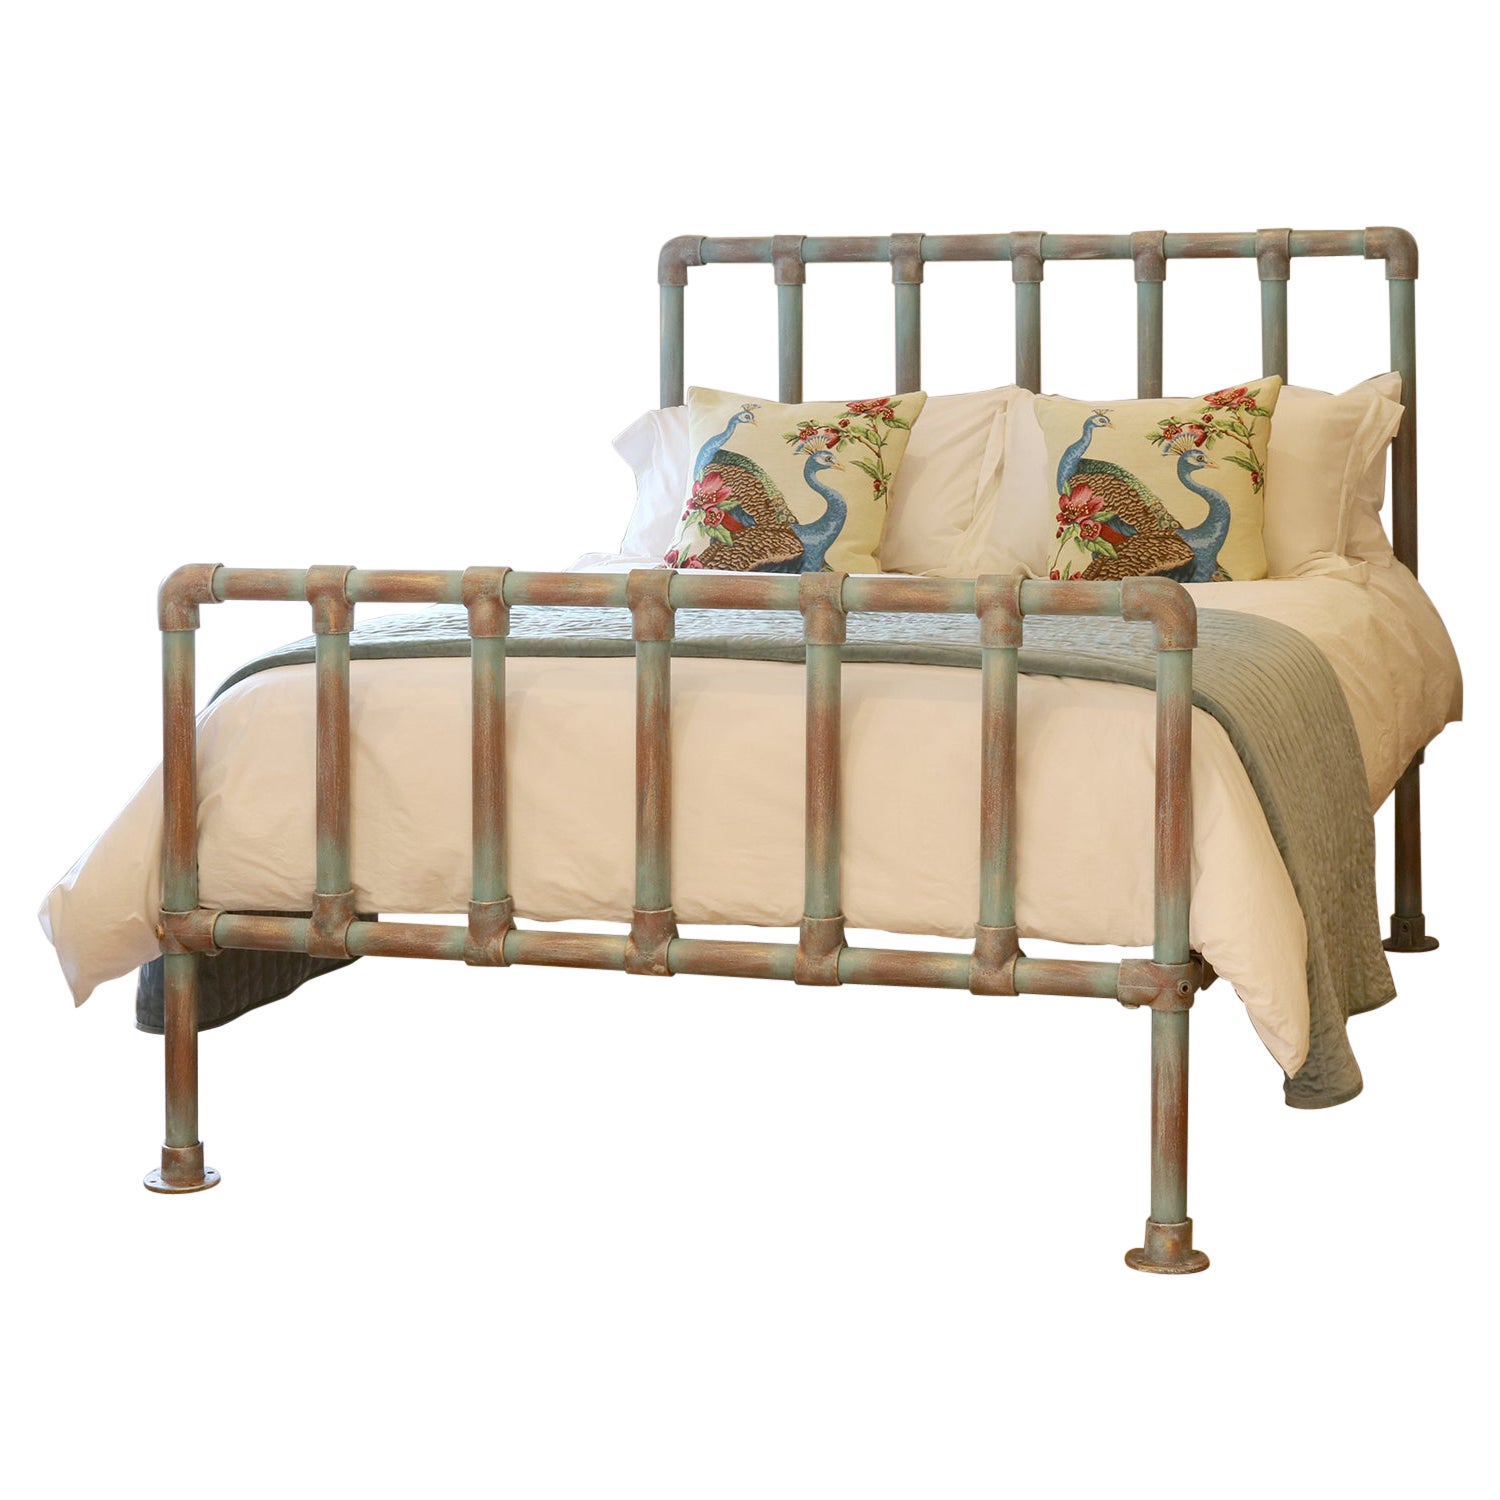 Bespoke Industrial Scaffold Bed, SCAF1 For Sale